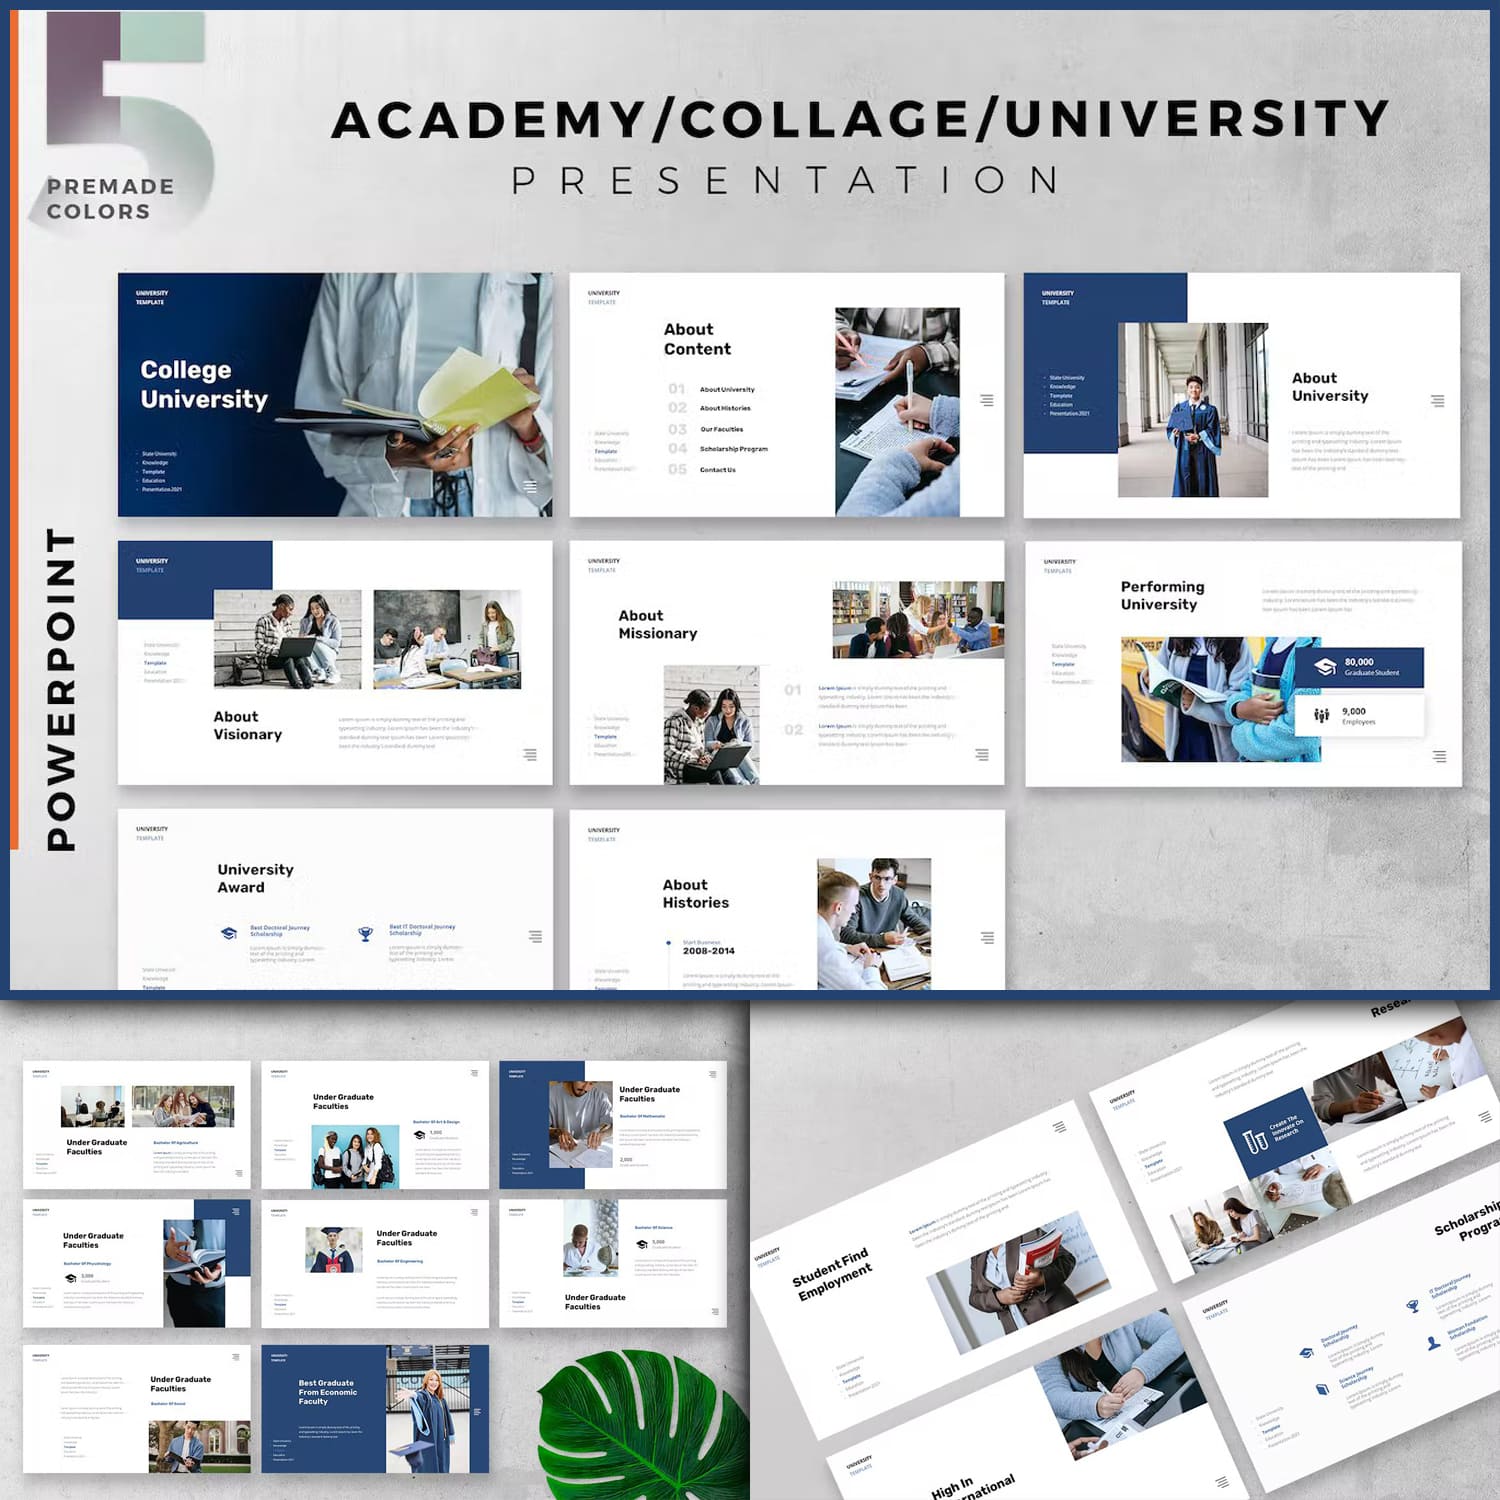 Education University Presentation Slide - main image preview.